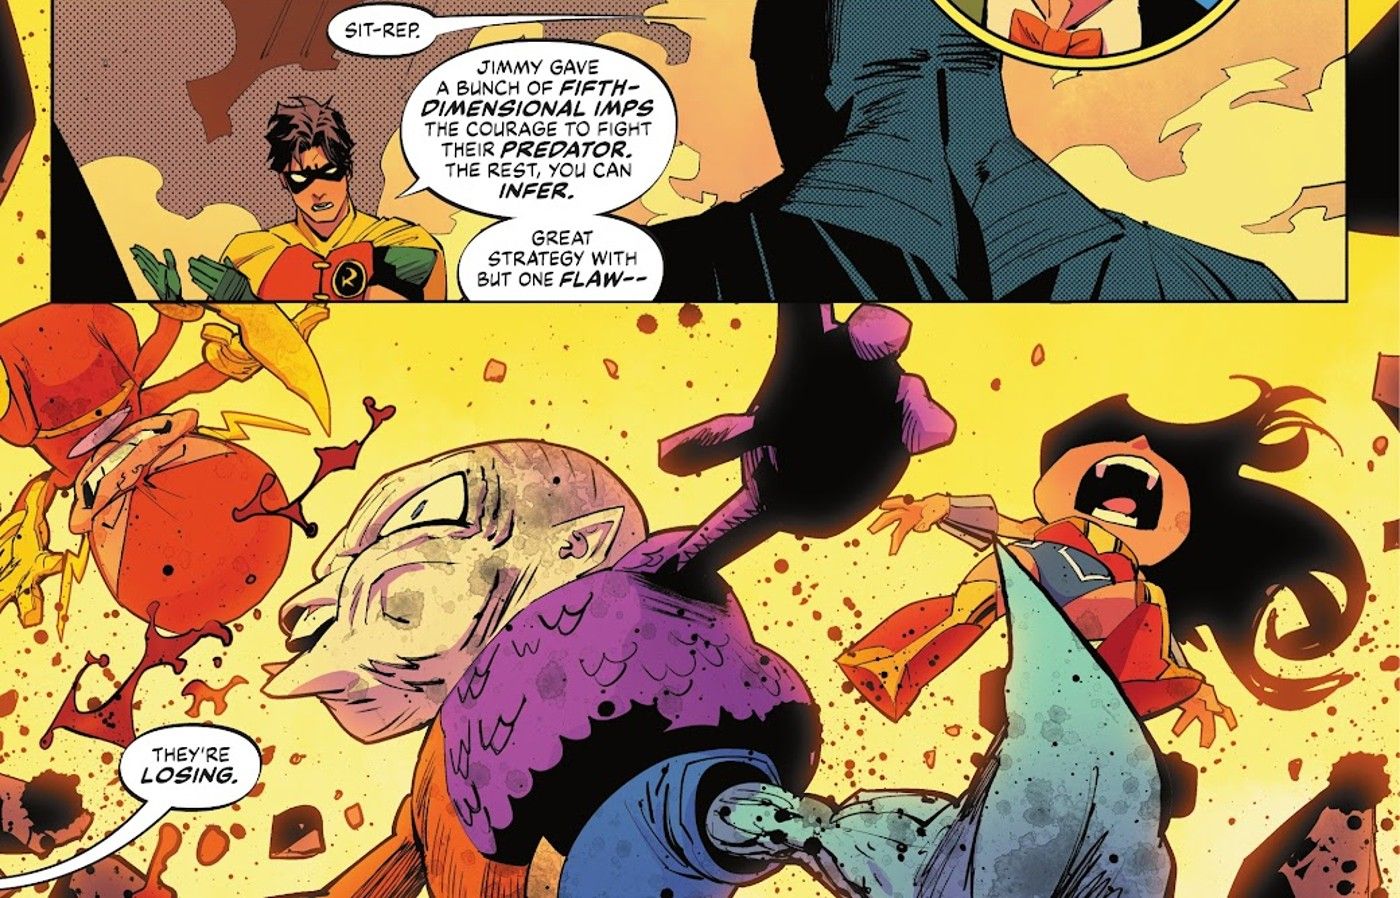 Comic book panels: Robin tells Batman that the Imp Justice League is losing, including imp versions of Flash, Metamorpho, and Wonder Woman.